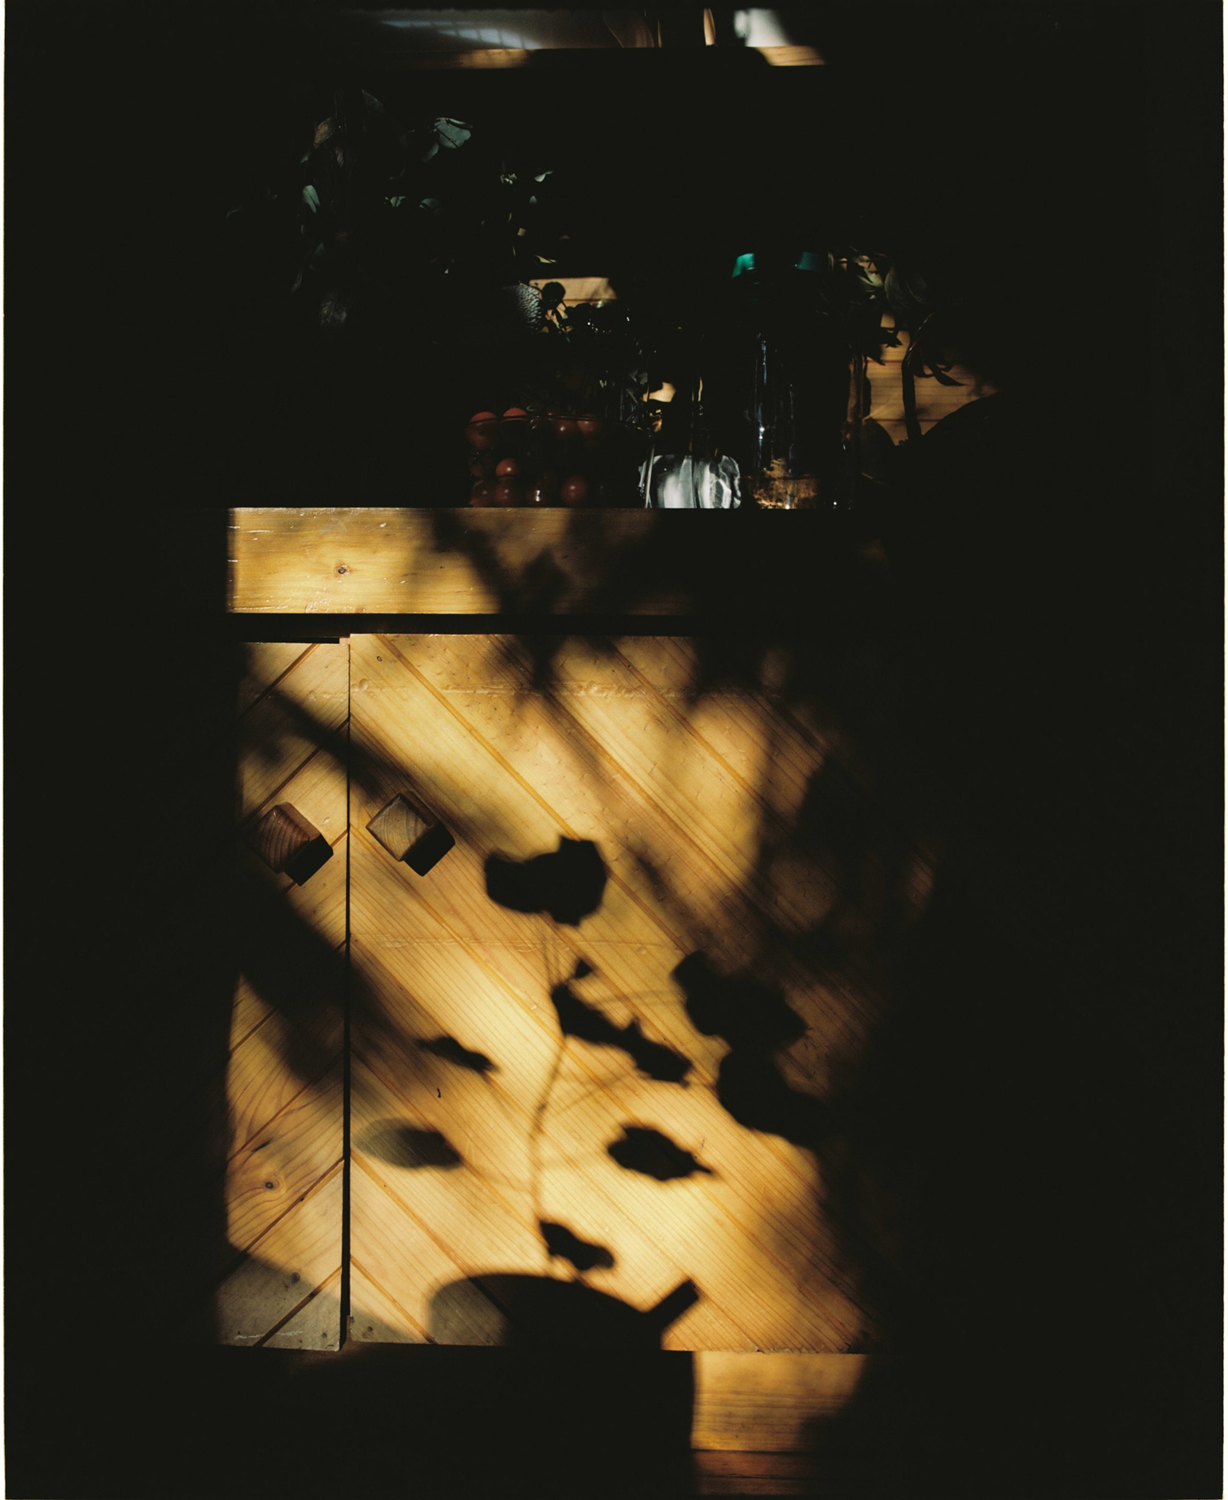 Colour photograph of shadows cast upon a kitchen bench.